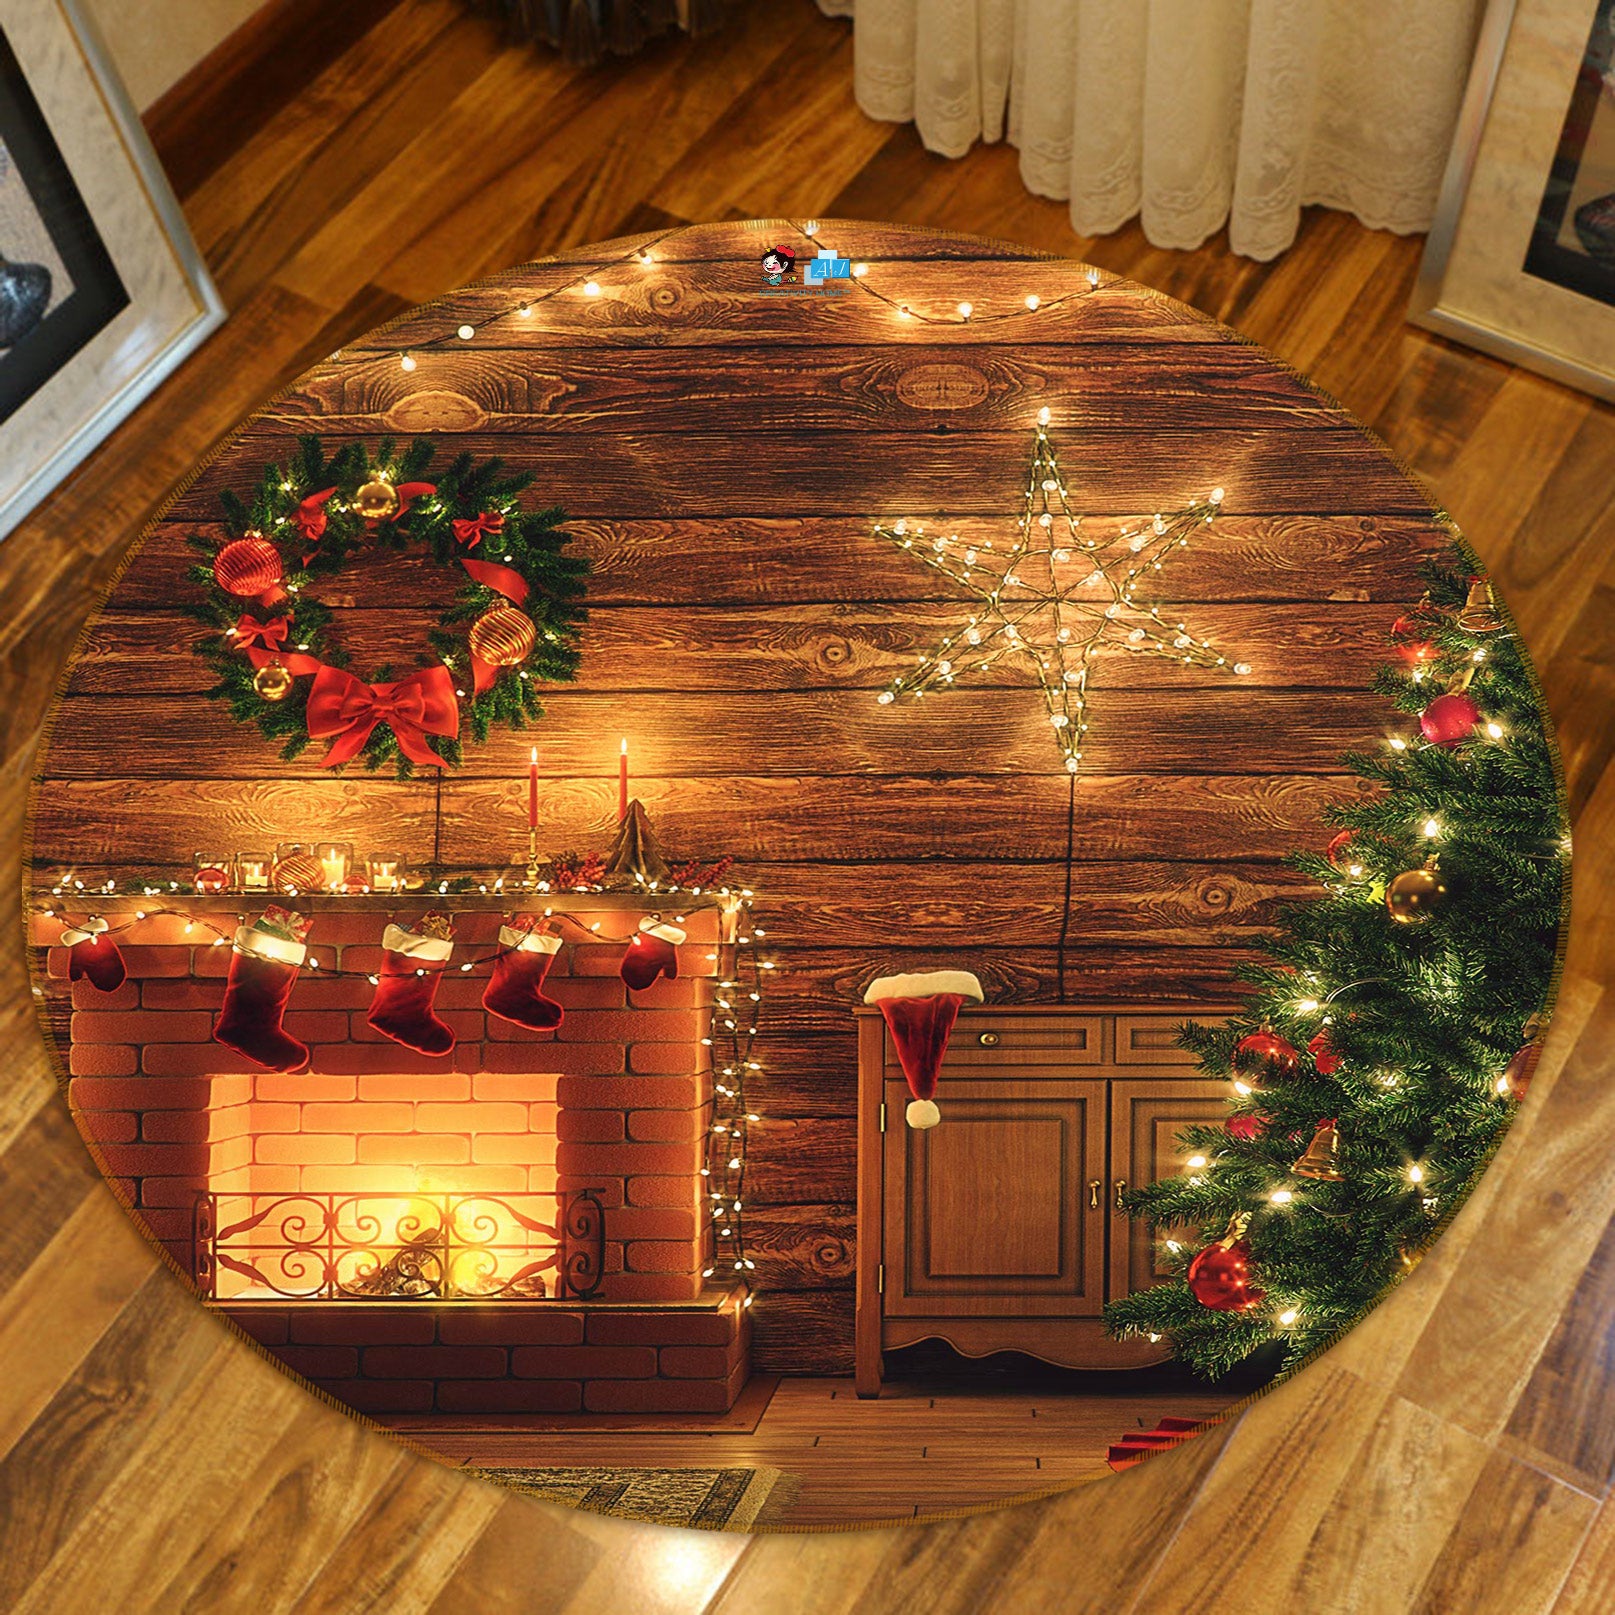 3D Fireplace Tree 54093 Christmas Round Non Slip Rug Mat Xmas